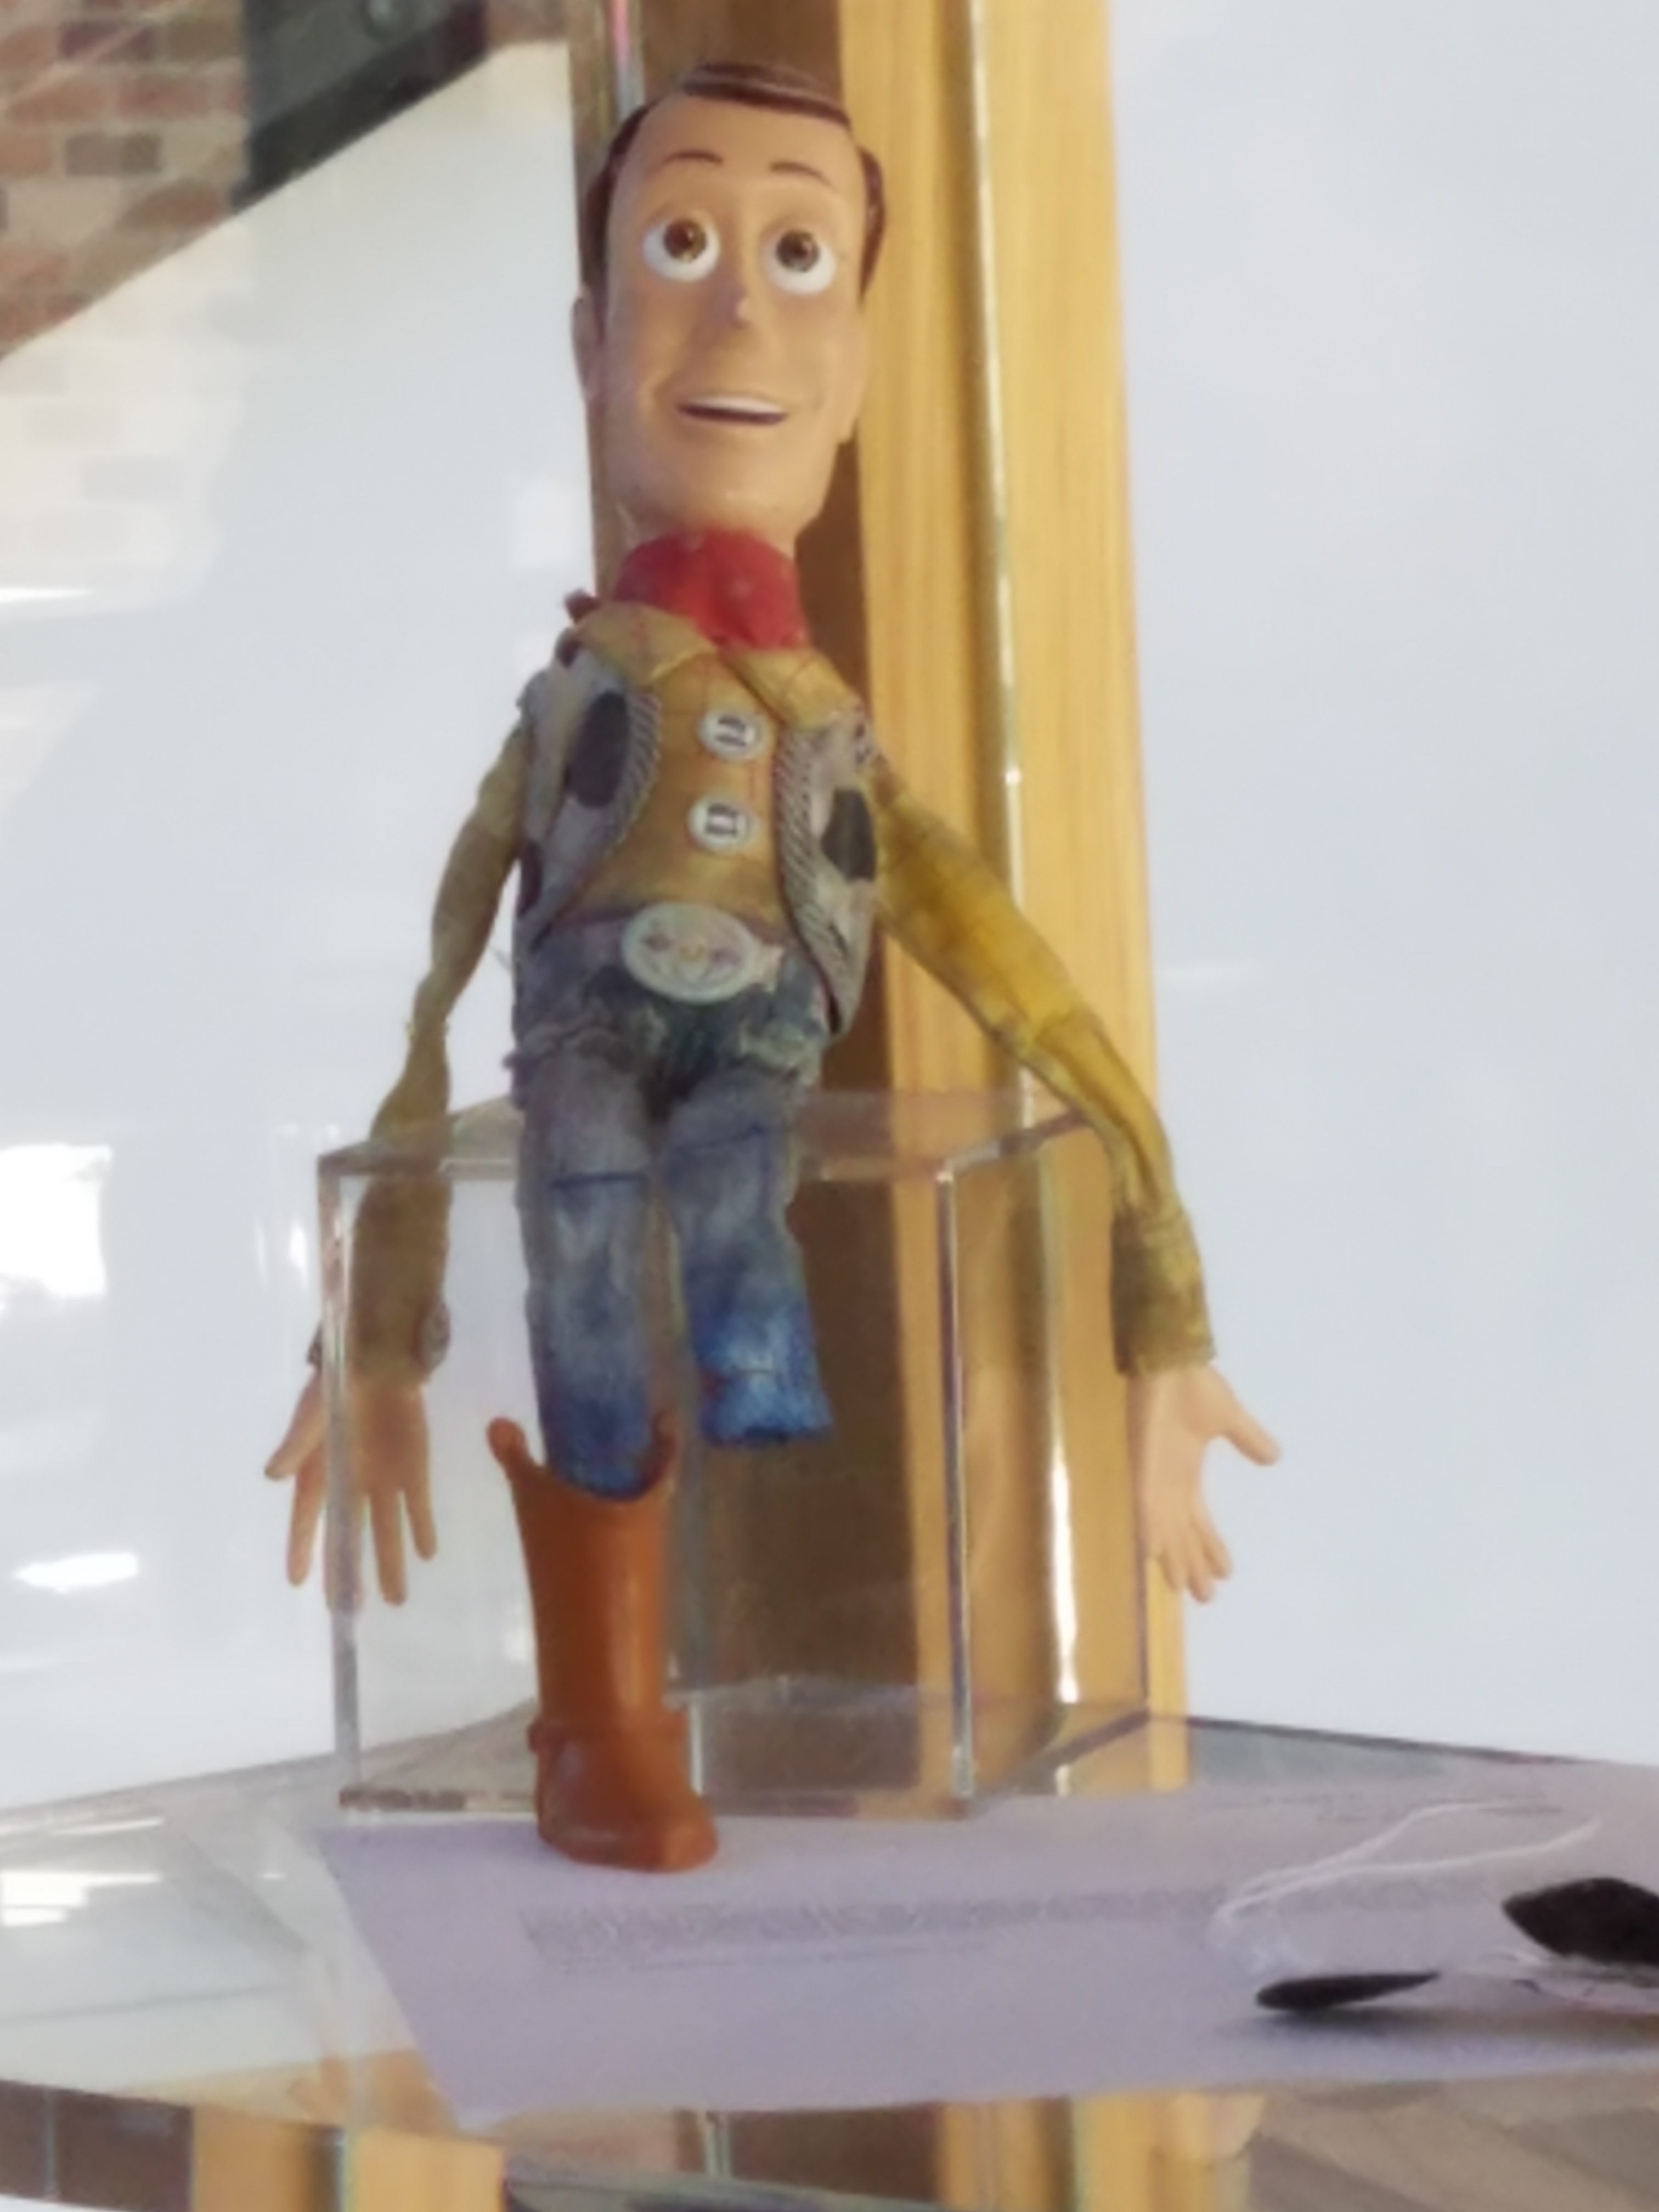 woody doll at pixar legend